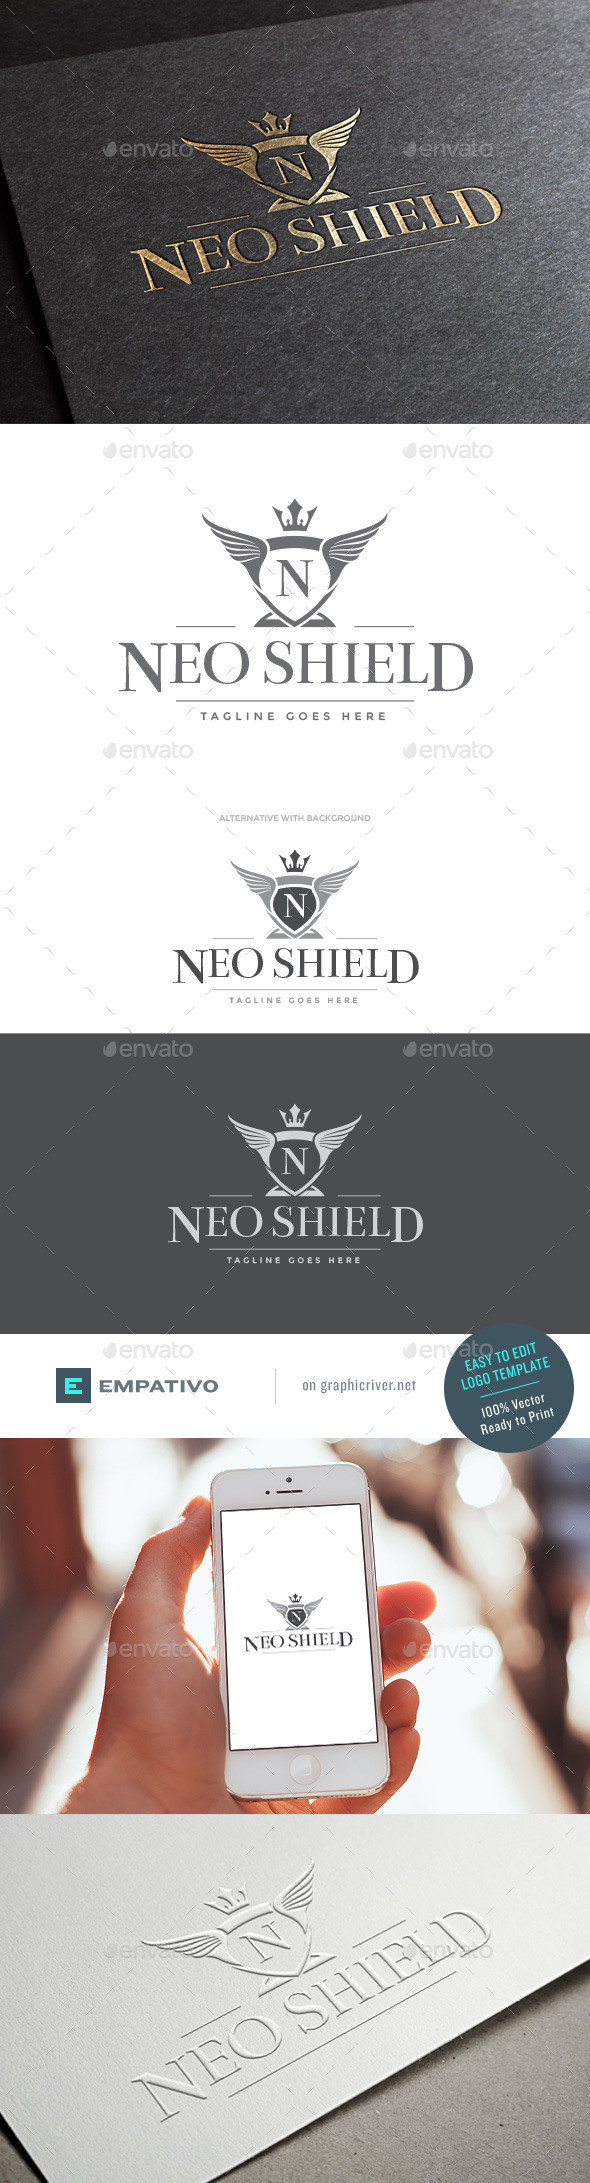 Neo shield logo template